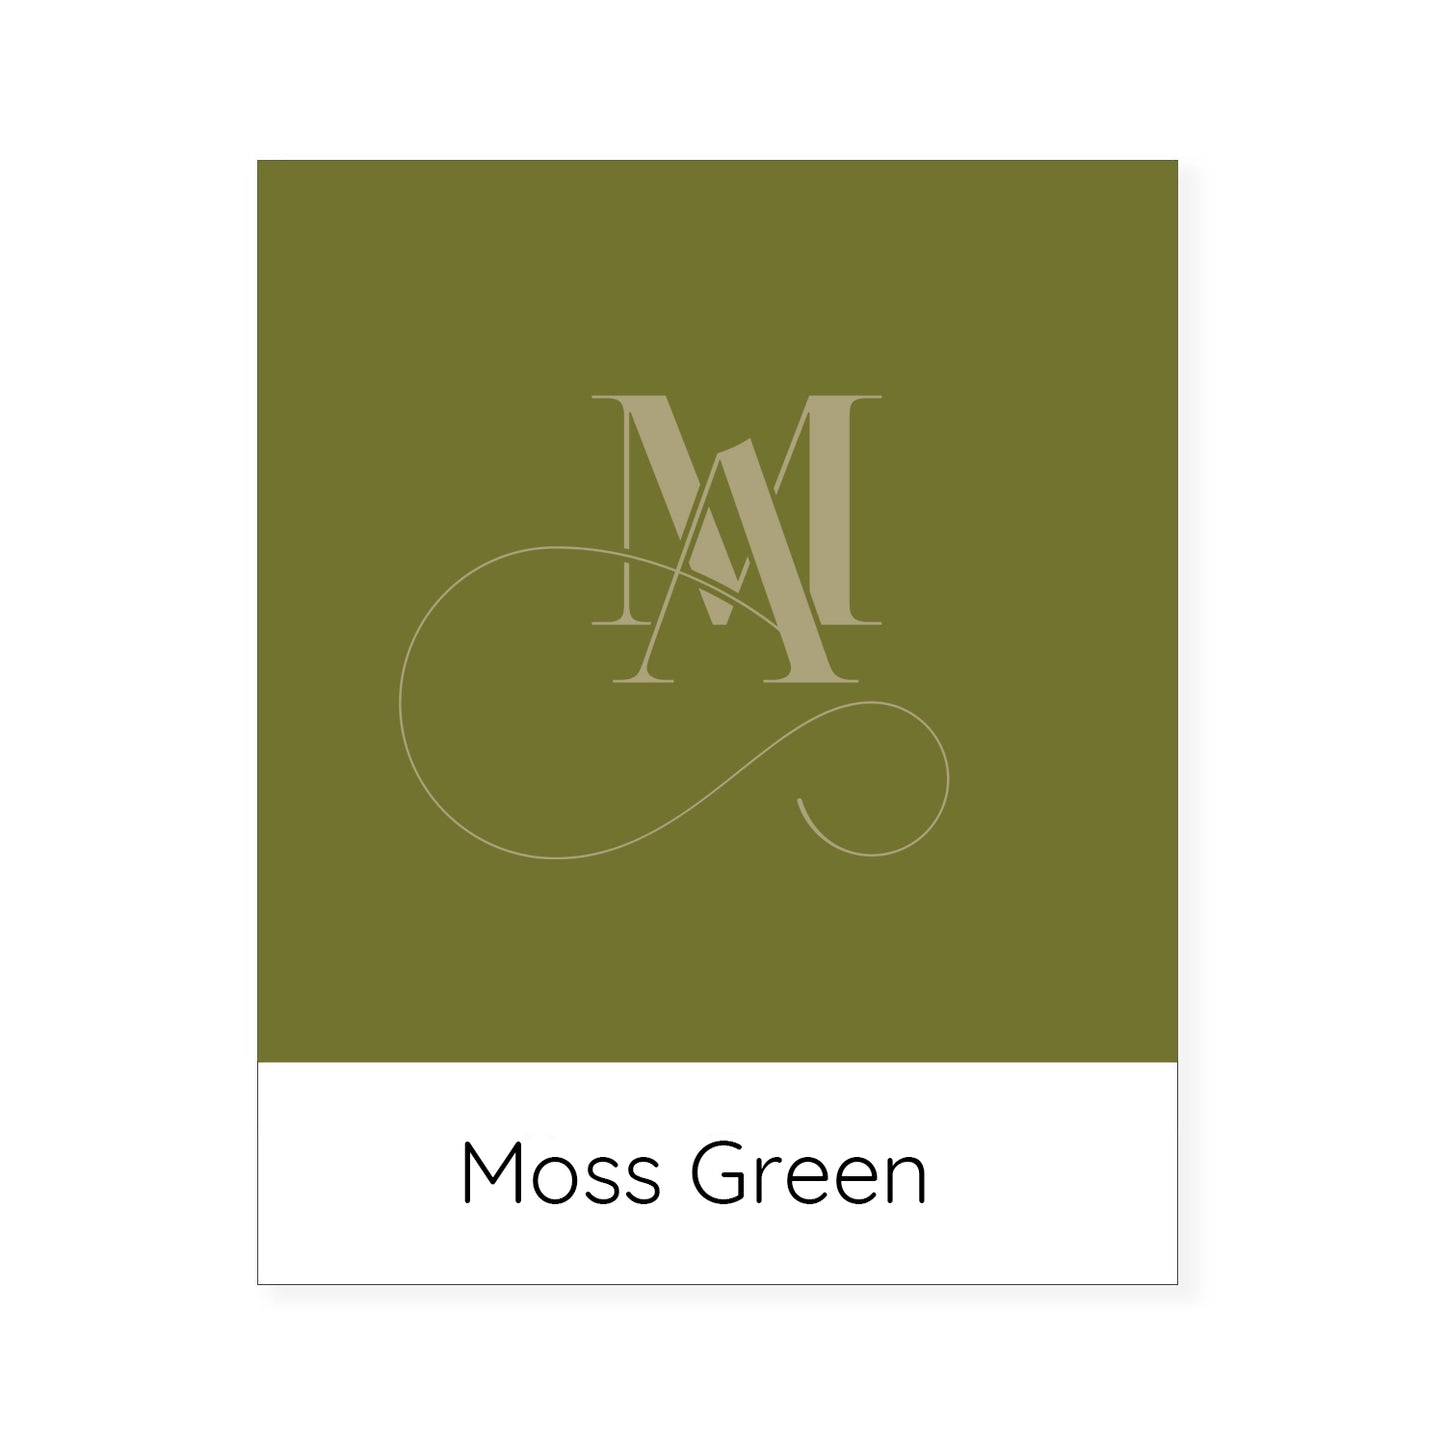 Moss Green Interior Design, Moss Green-Coloured Cushion Shop, Couch Pillow in Moss Green Shade, moss green cushion cover